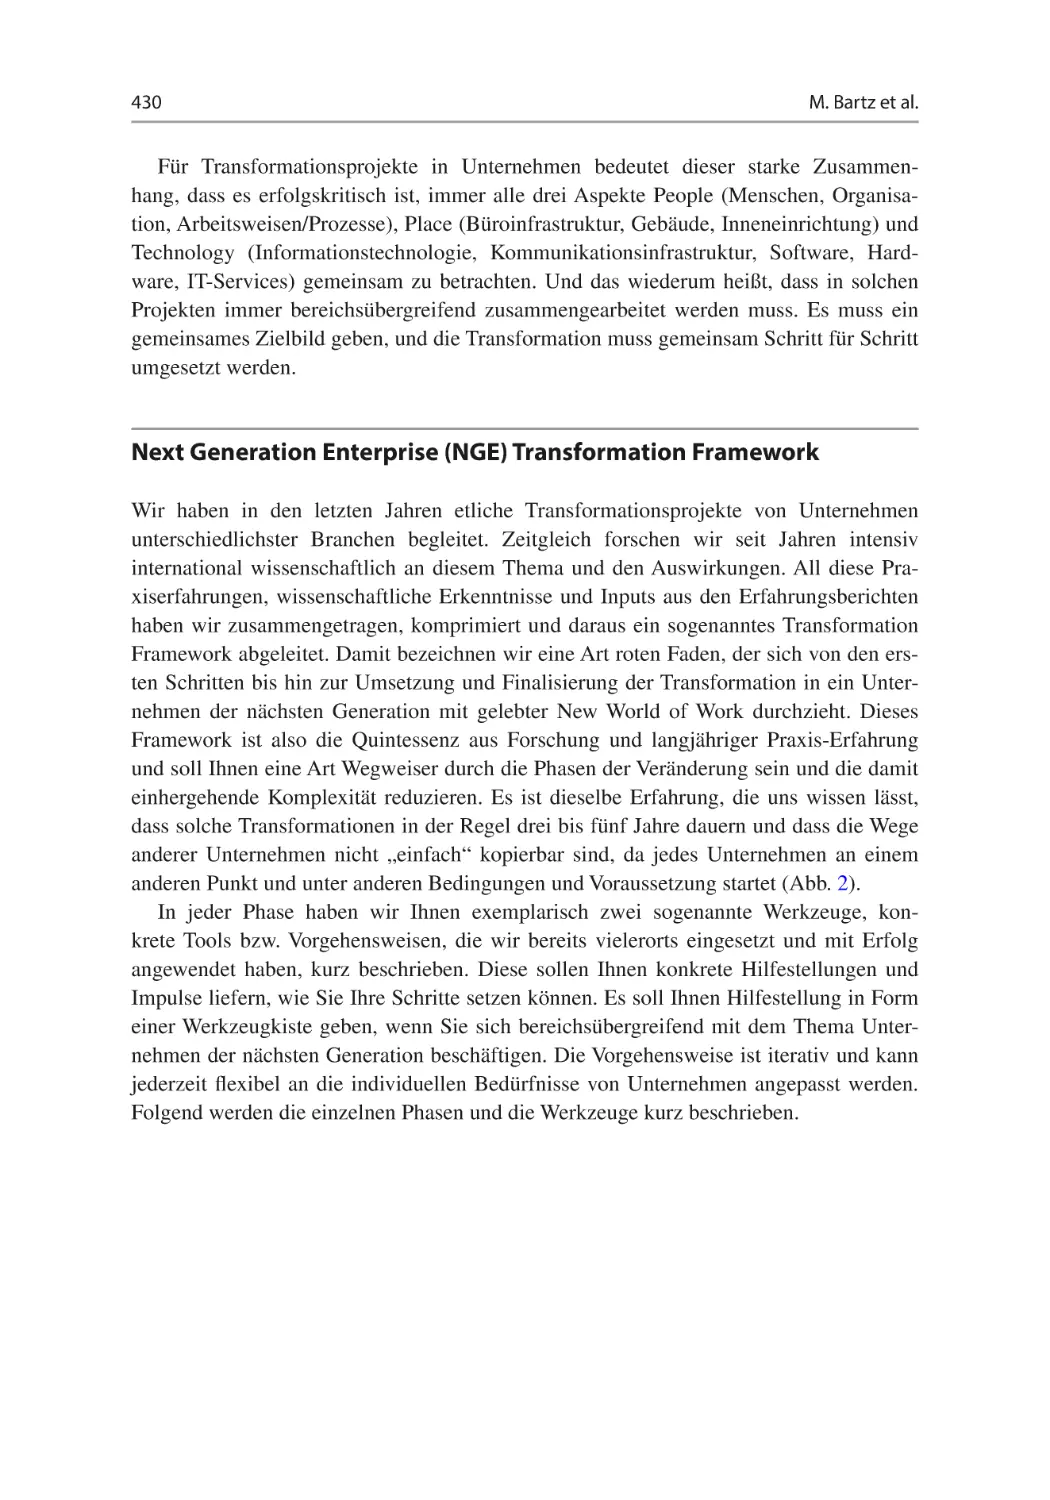 Next Generation Enterprise (NGE) Transformation Framework